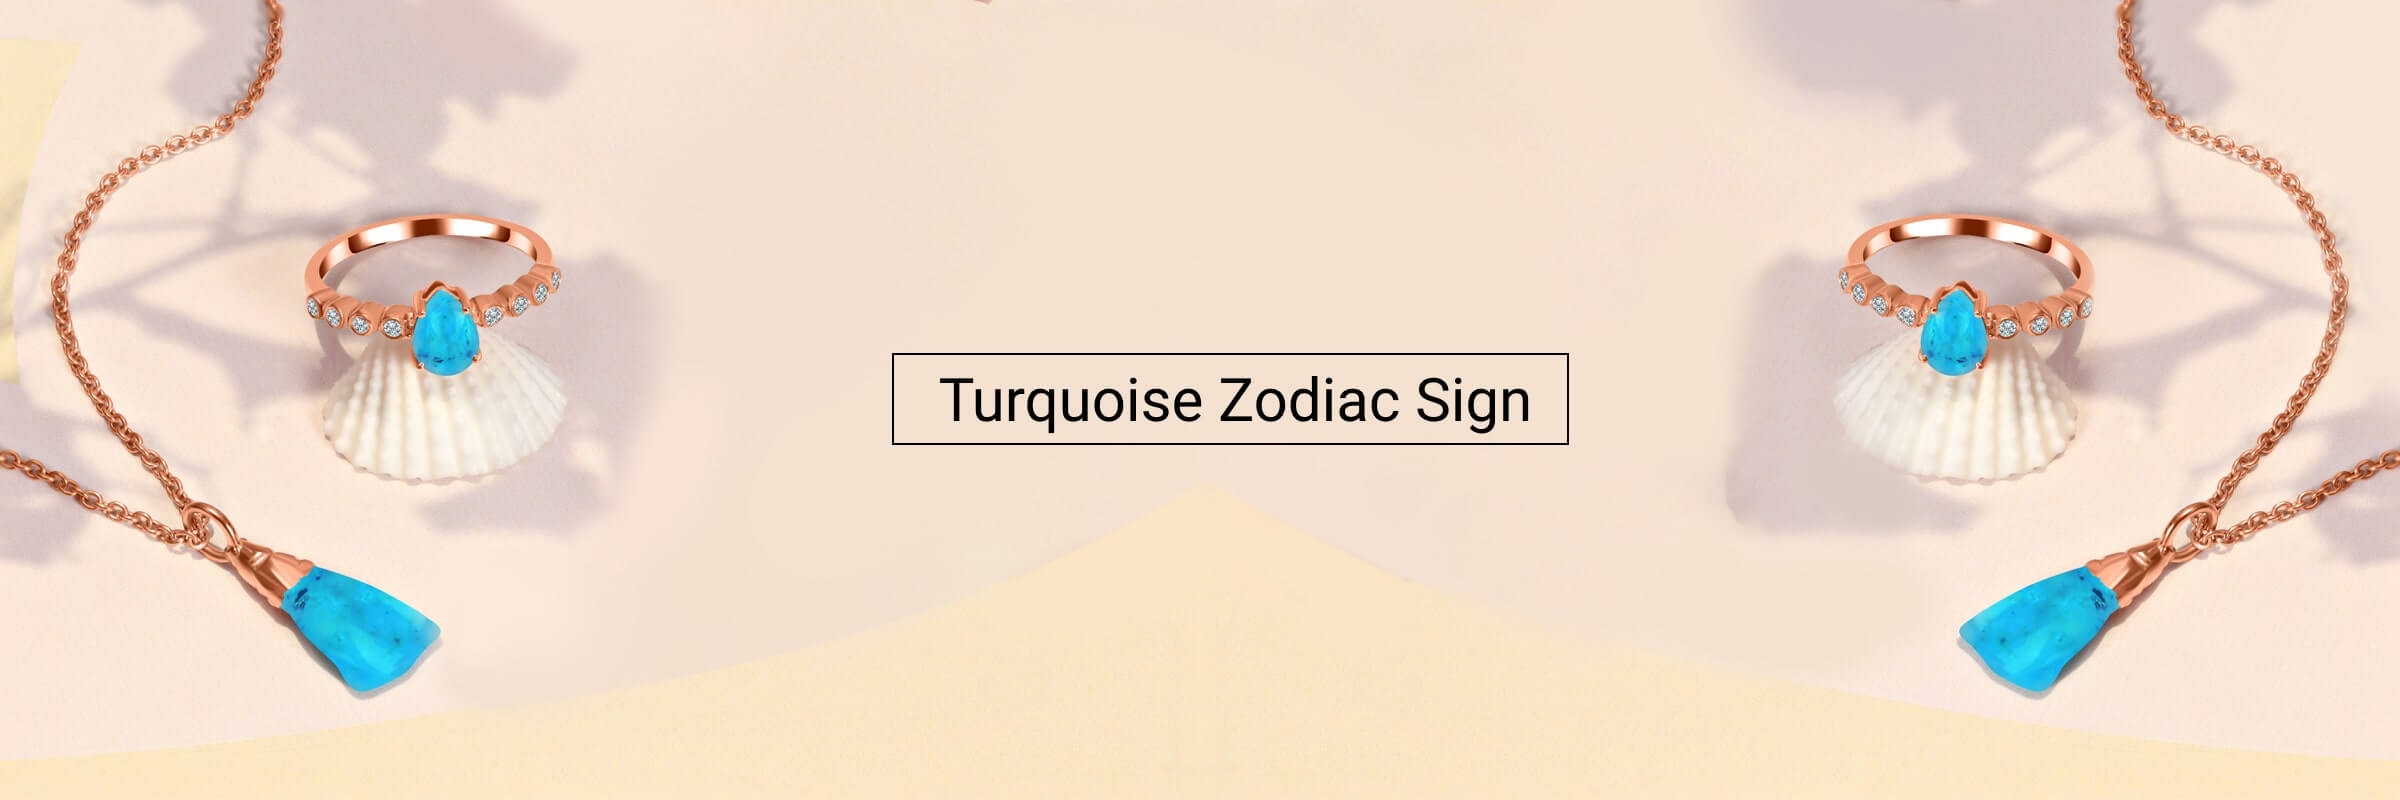 Turquoise Zodiac Sign